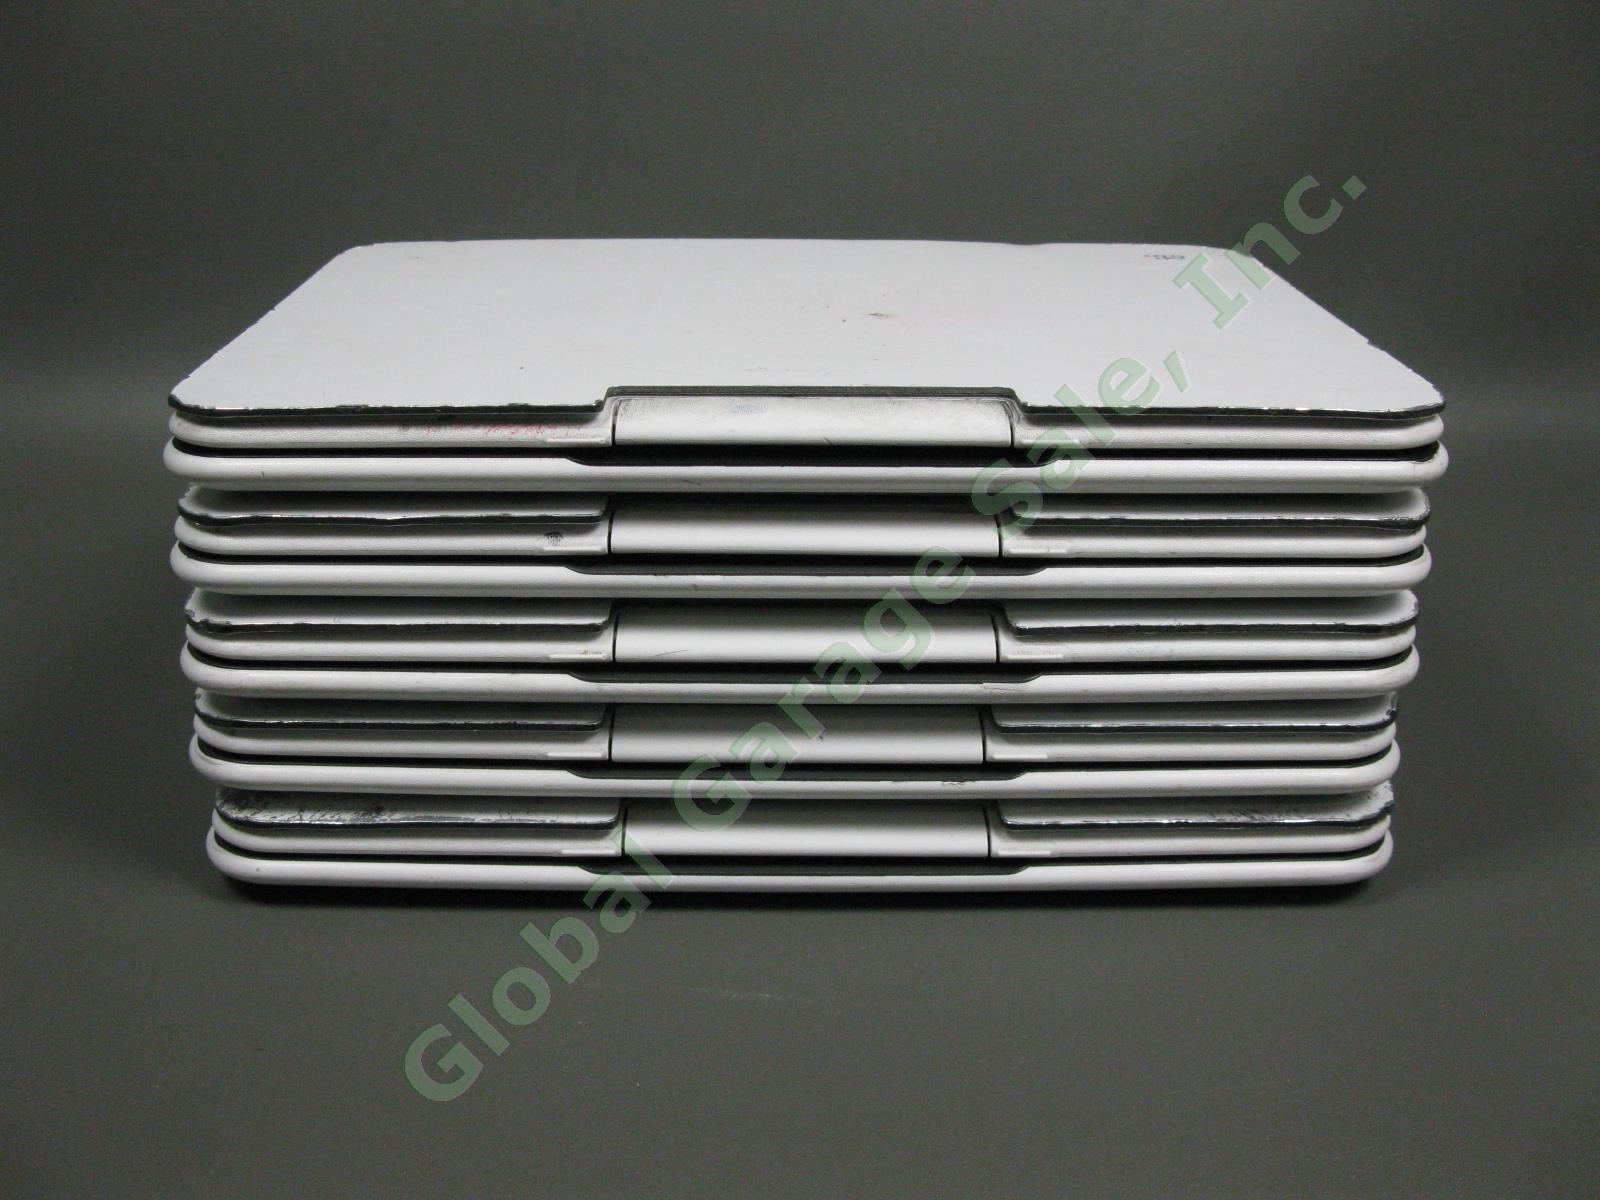 5 CTL NL6 Chromebook Notebook Laptops Lot Intel Celeron N2940 1.83GHz 4GB RAM 3